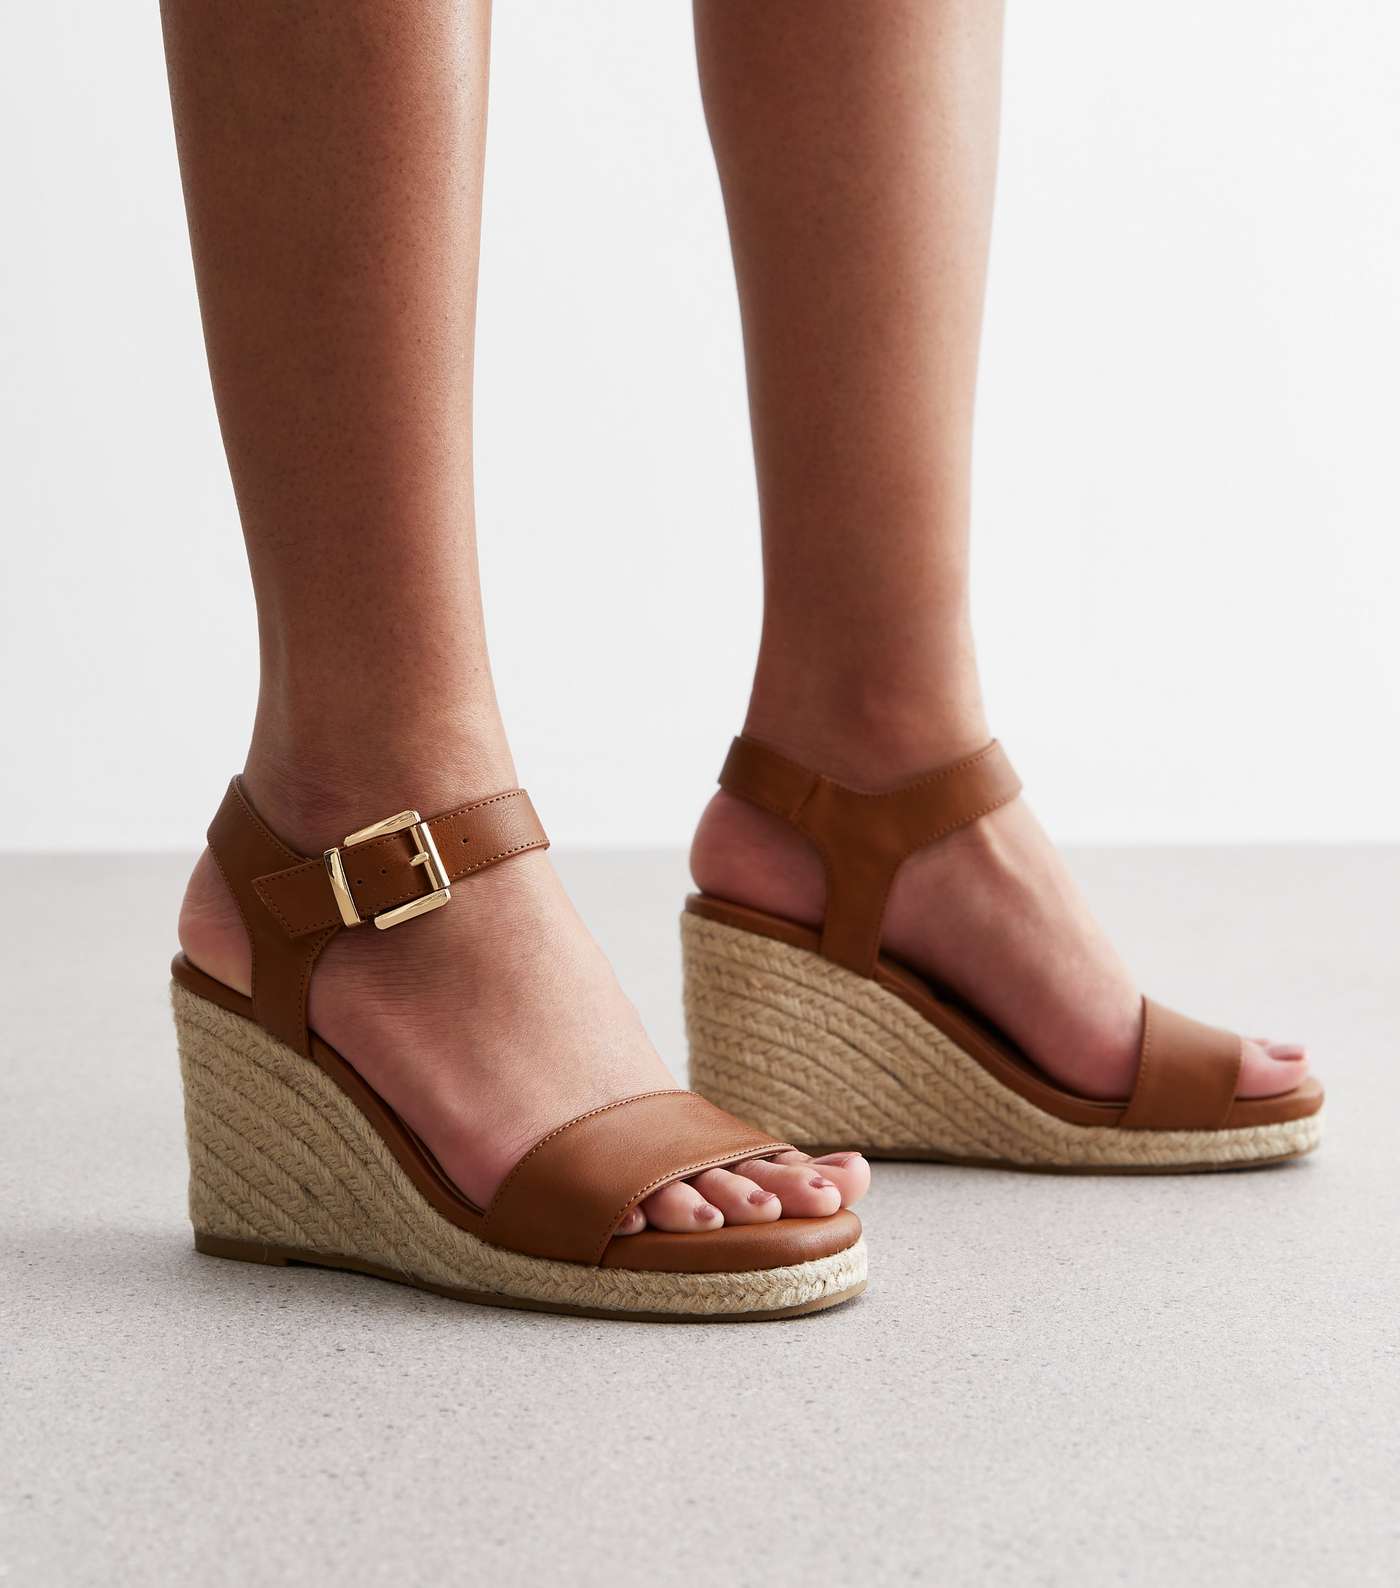 Wide Fit Tan Leather-Look Espadrille Wedge Heel Sandals